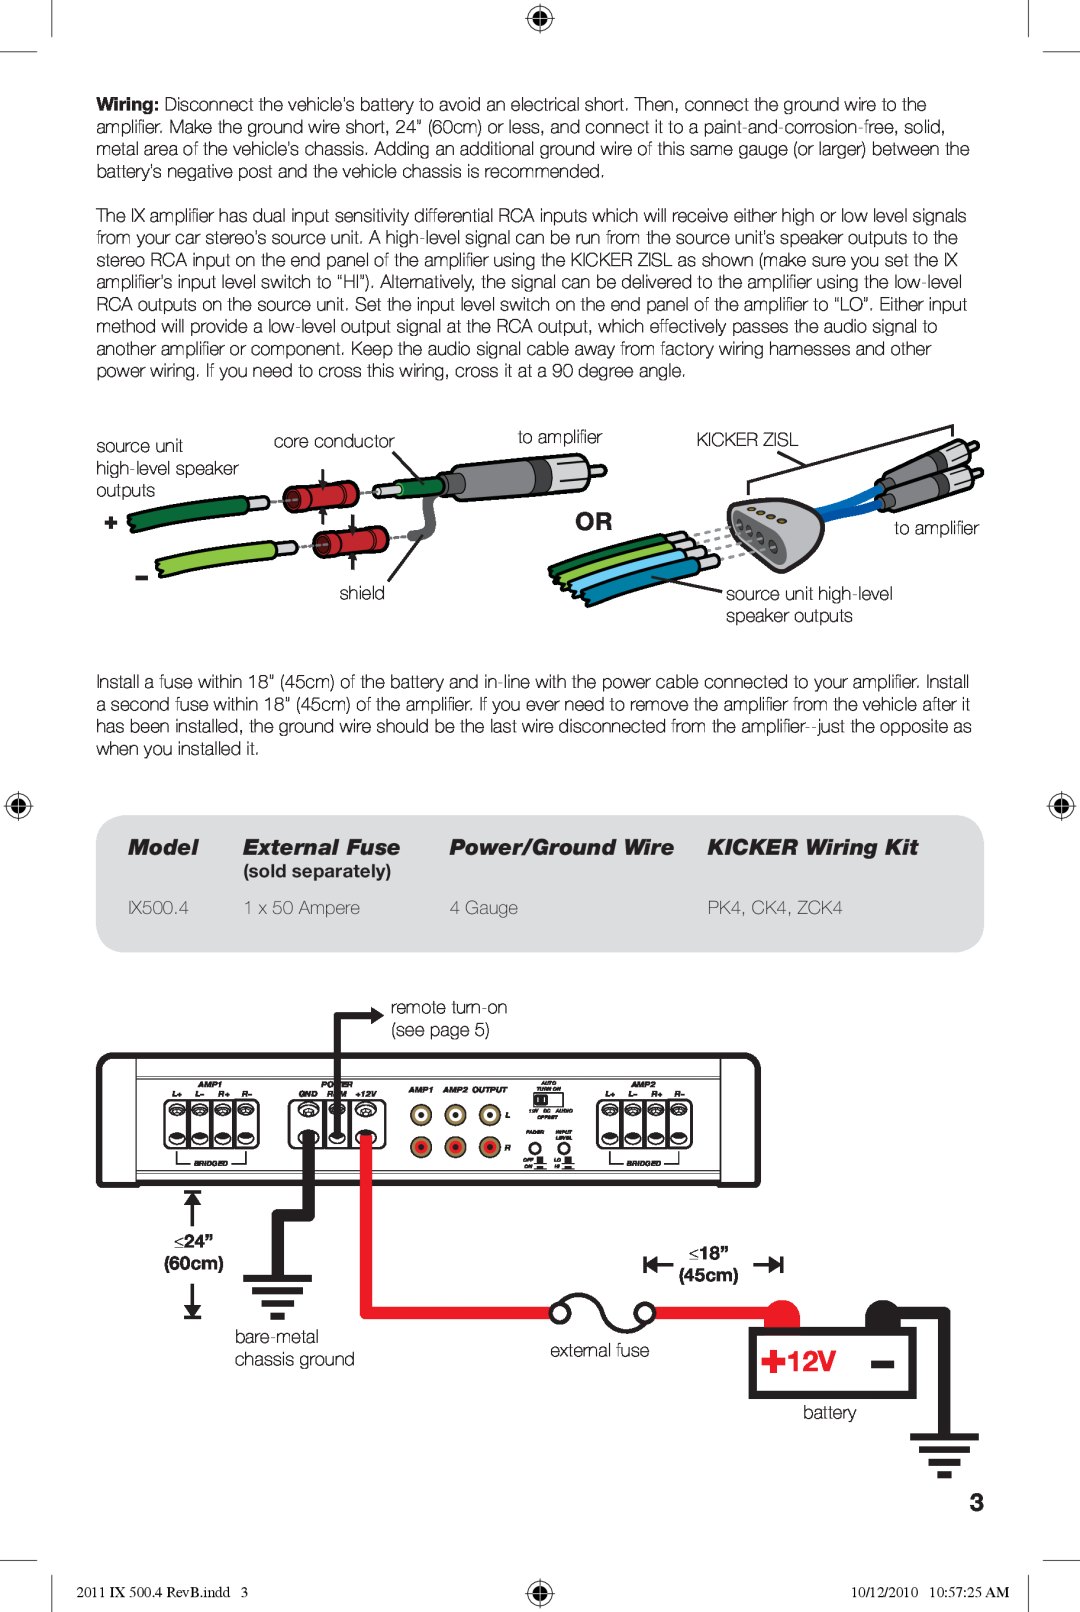 Kicker IX500.4 manual Model, External Fuse, Power/Ground Wire, KICKER Wiring Kit, remote turn-on, see page, ≤24”, ≤18” 